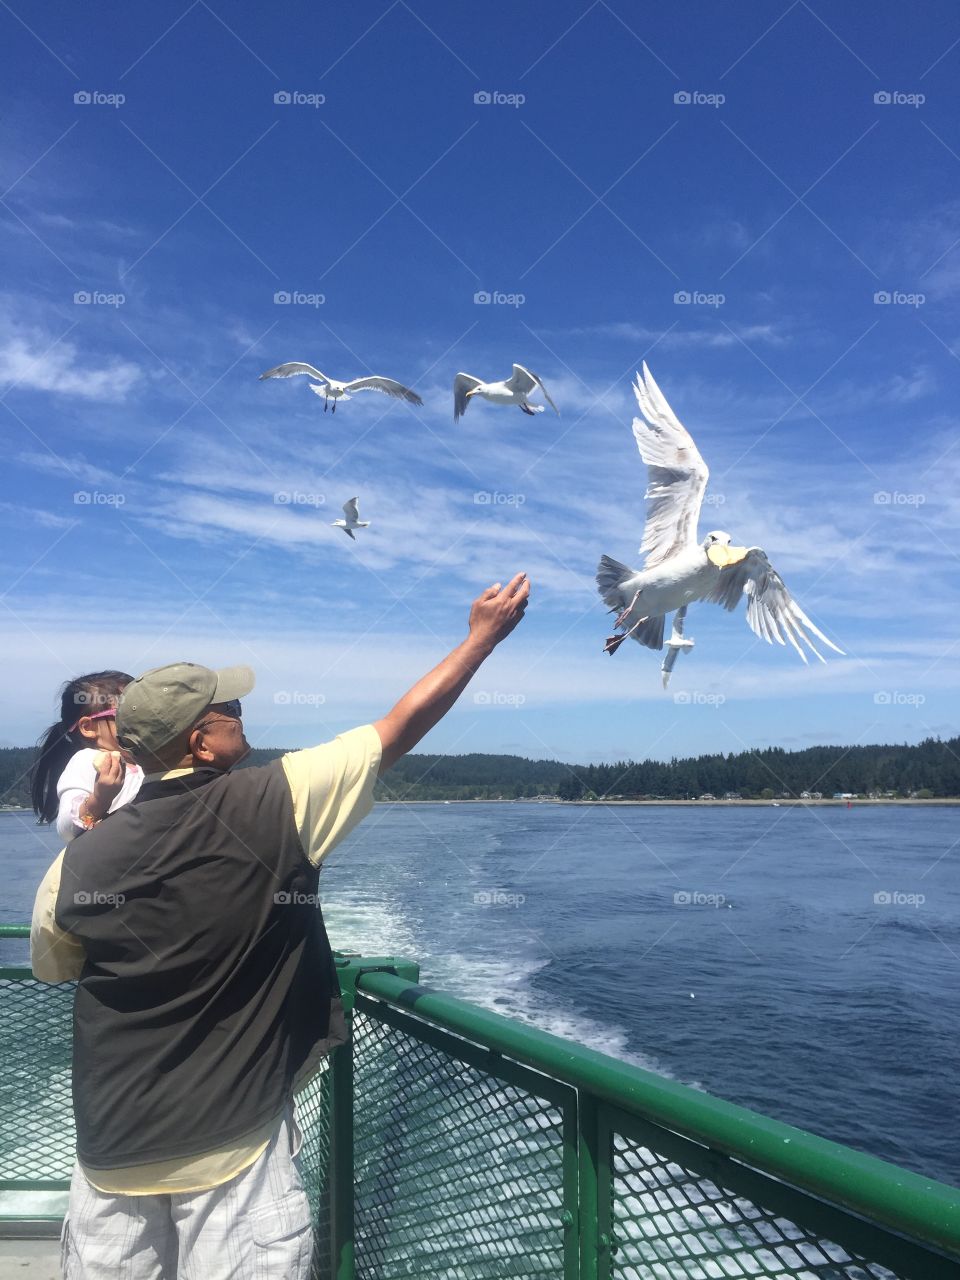 Feeding the birds. Ferry ride to Seattle